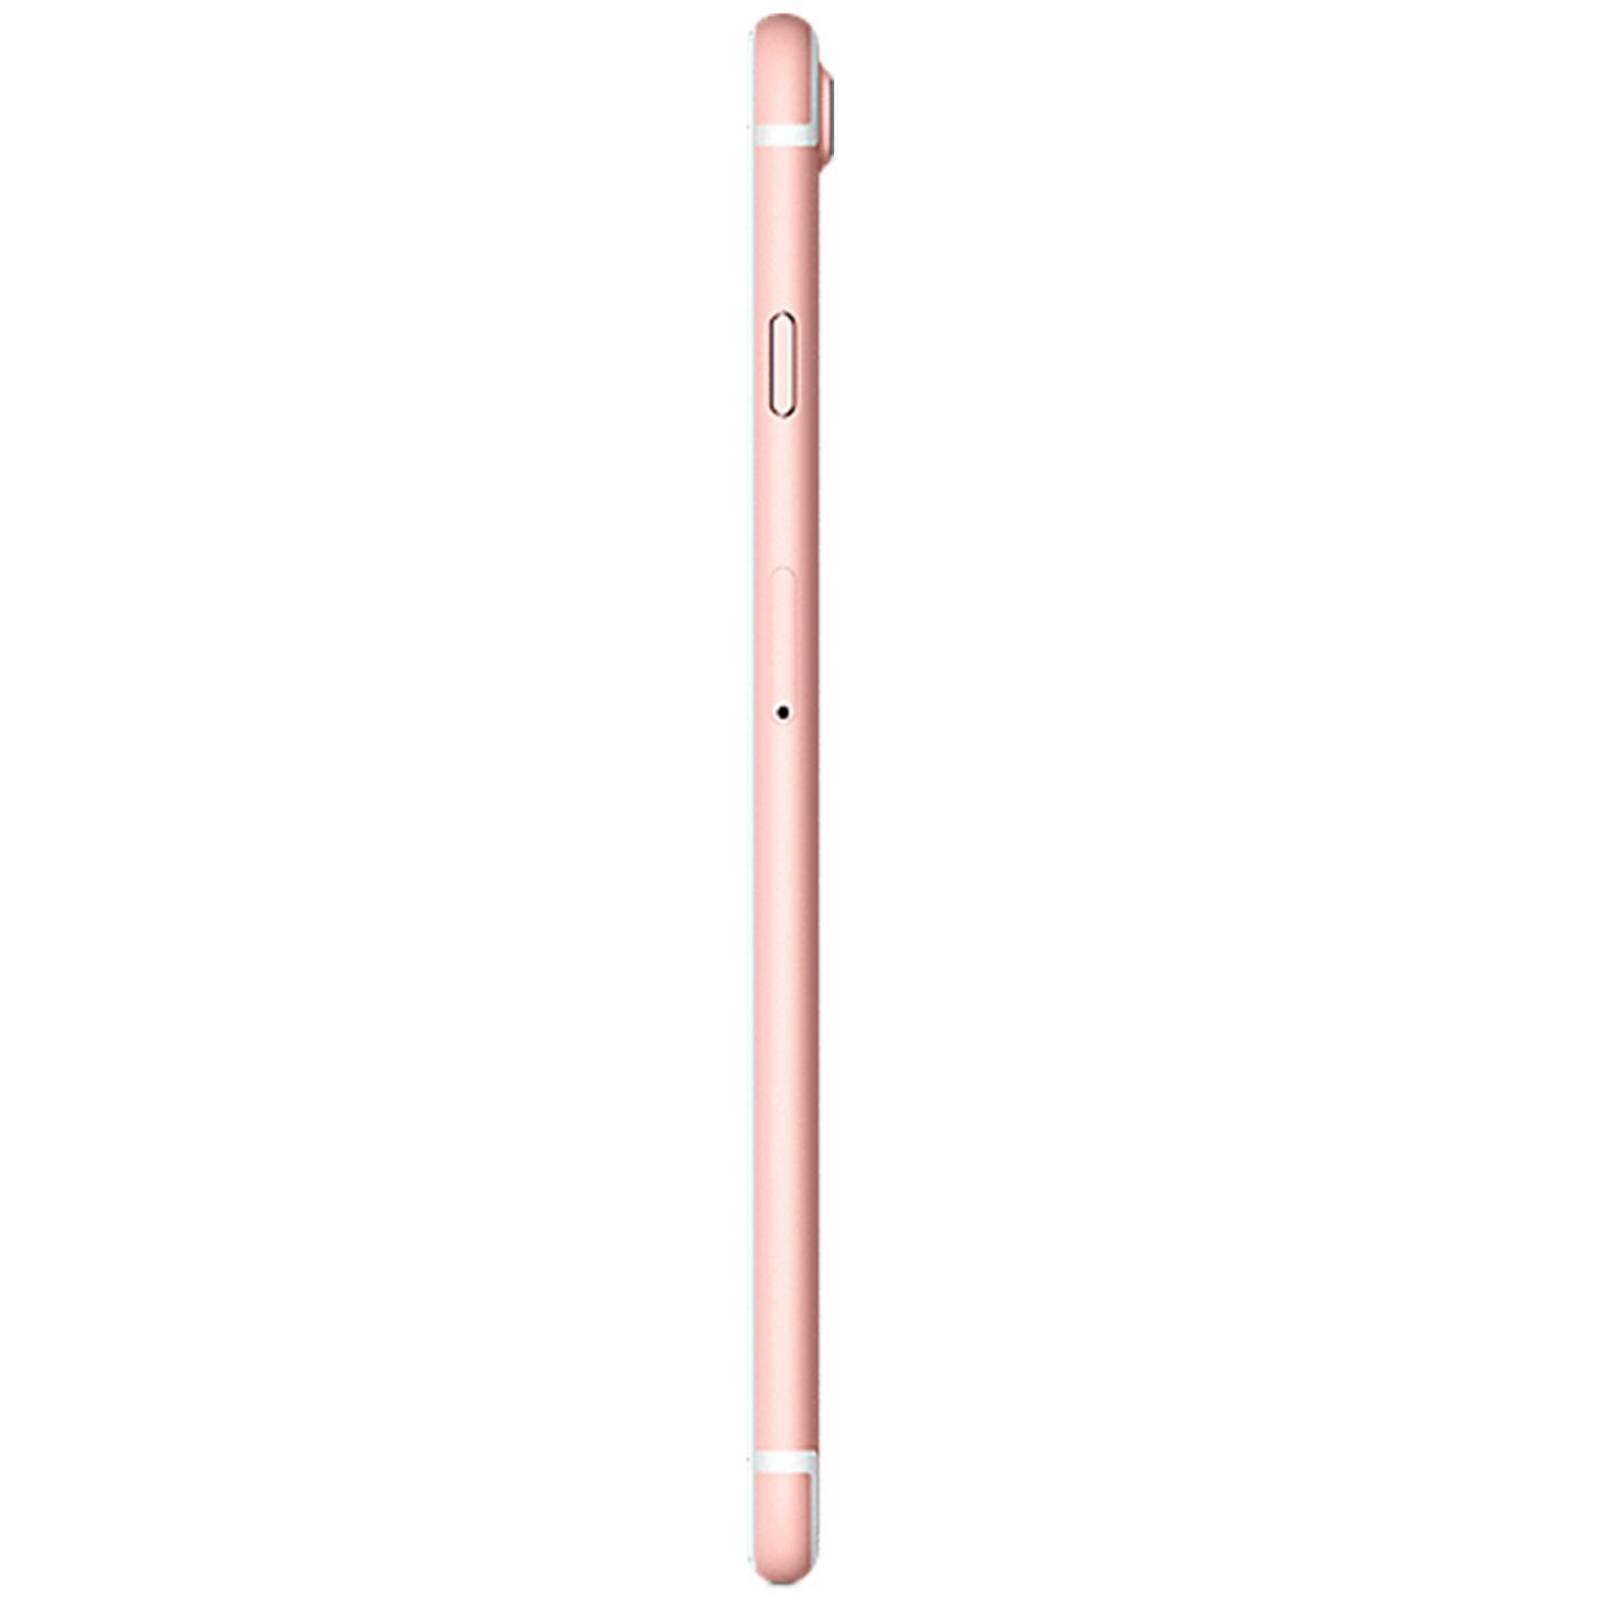 Celular APPLE iPhone 7 Plus 32GB A10 IOS 10 Rose M1 GTA ReAcondicionado 